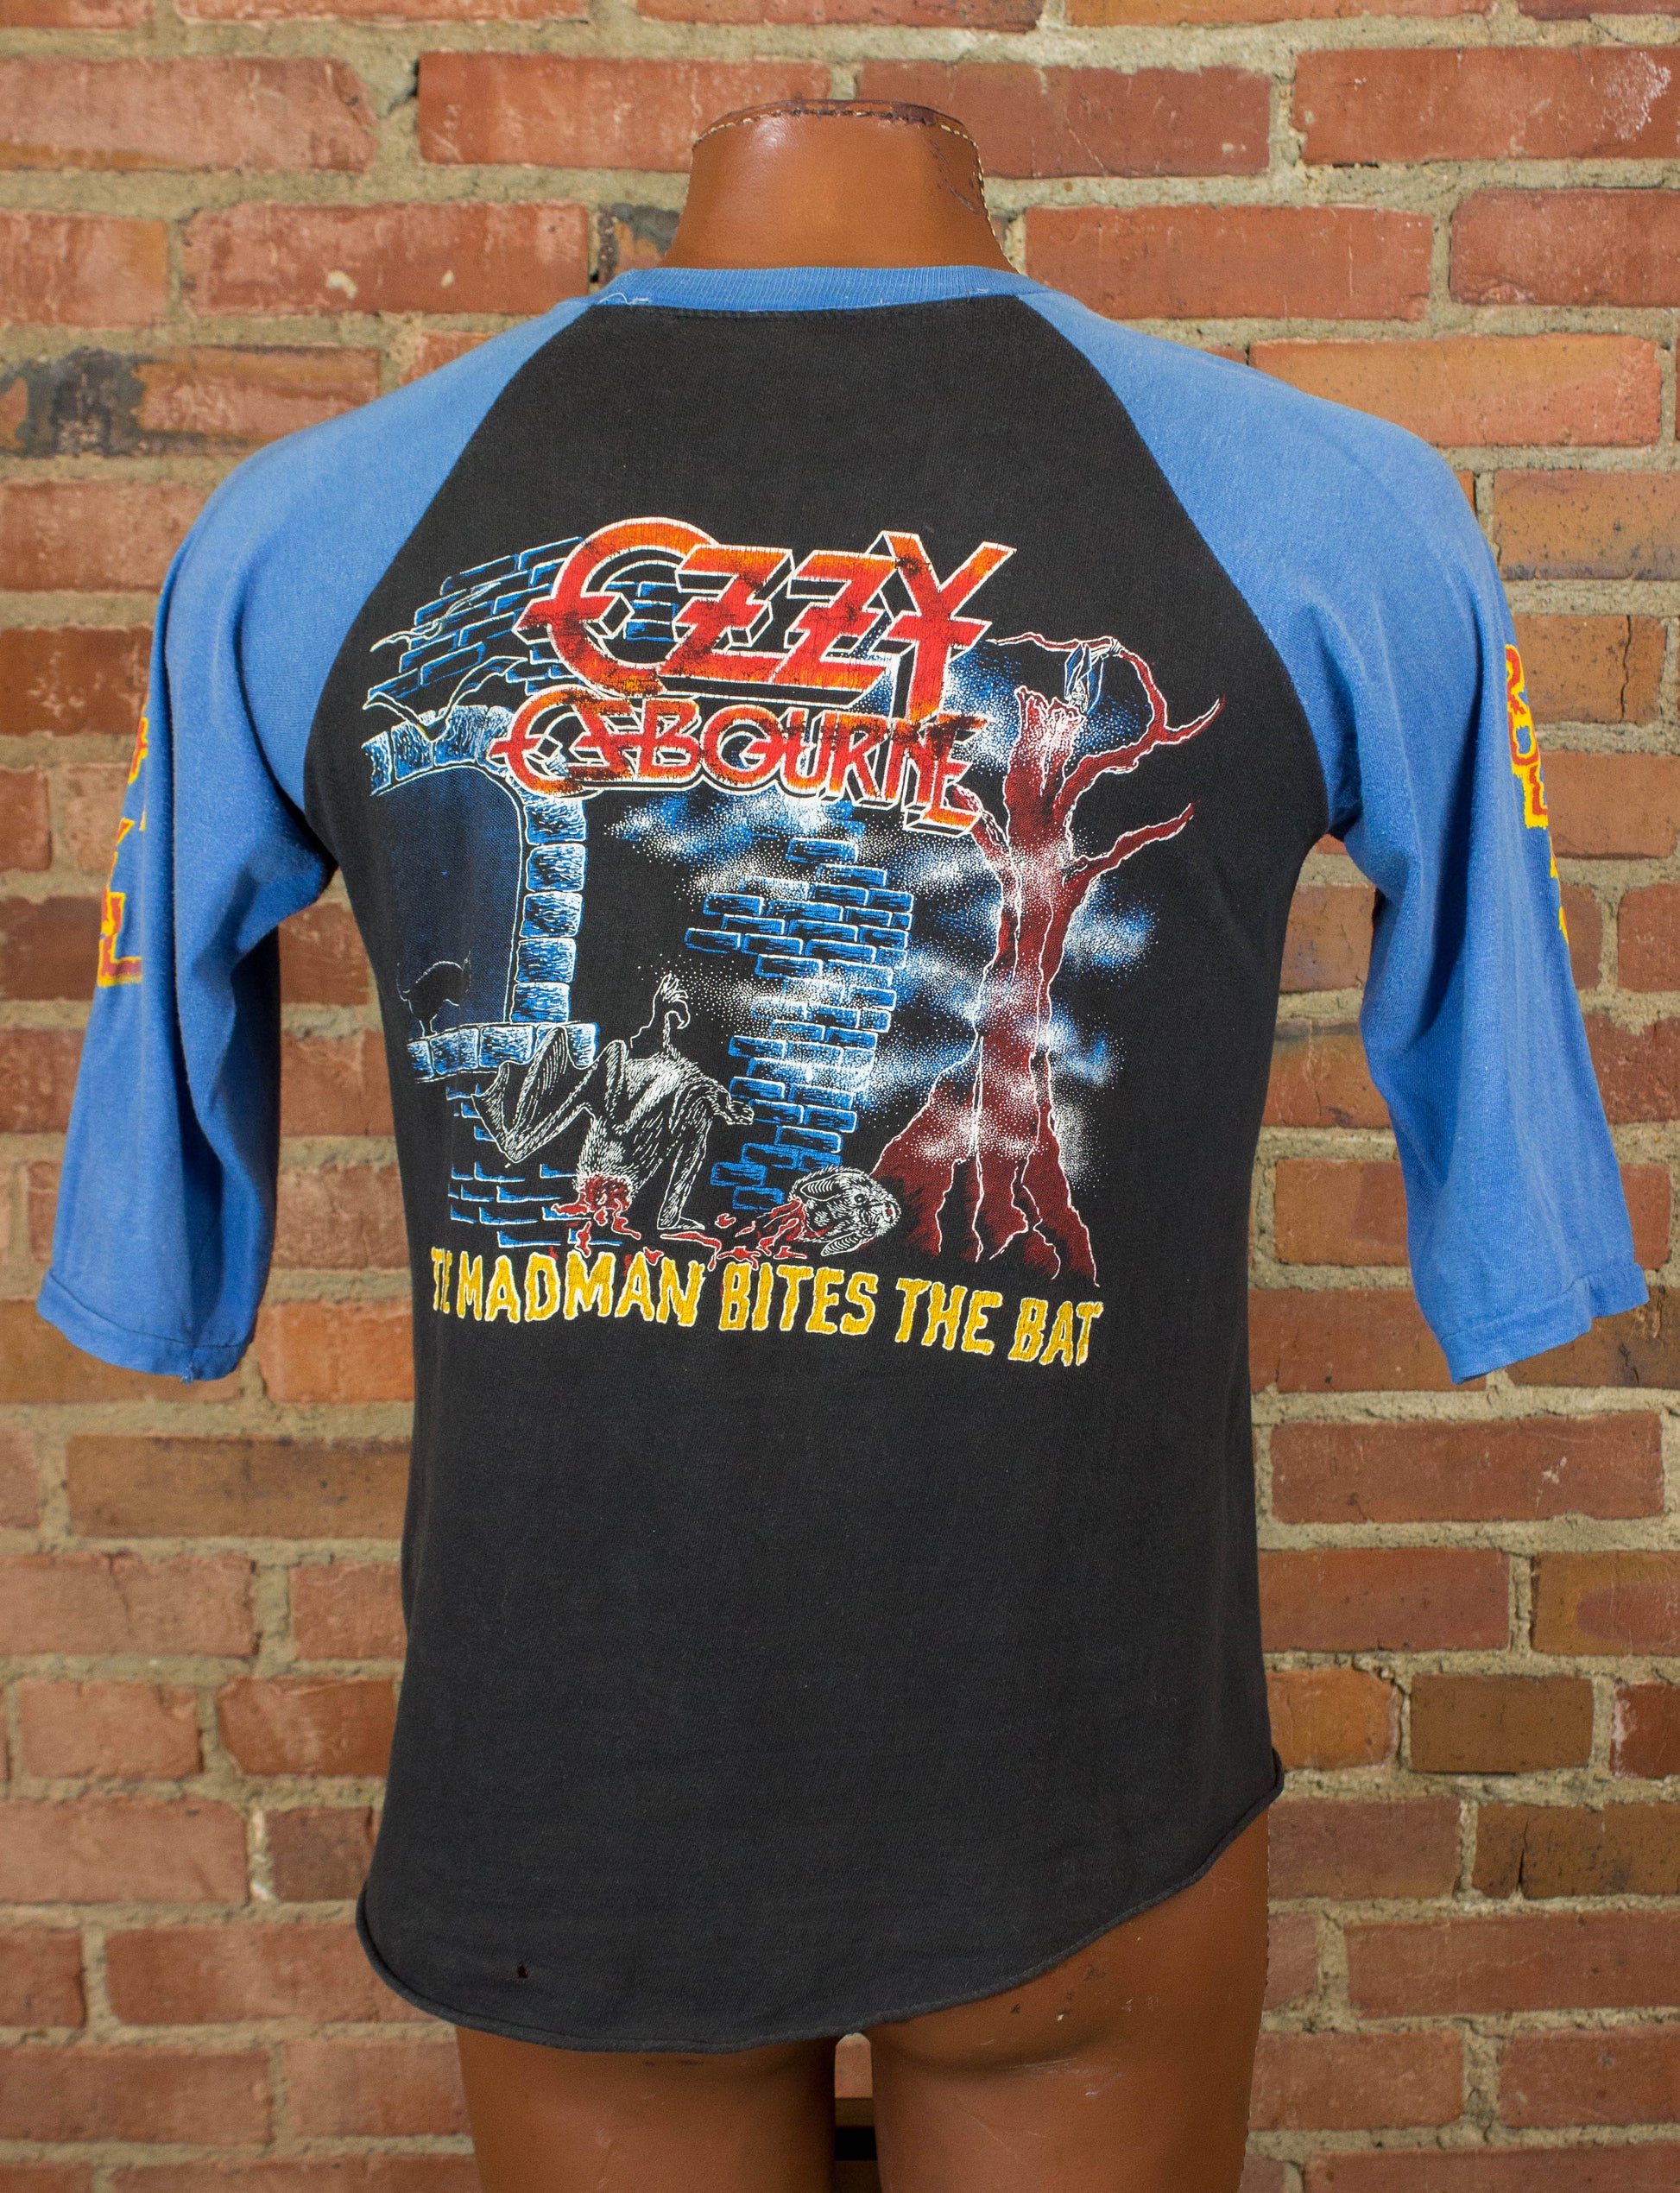 Vintage Ozzy Osbourne Concert T Shirt 1982 The Madman Bites The Bat Parking Lot Bootleg Raglan Jersey Medium-Large